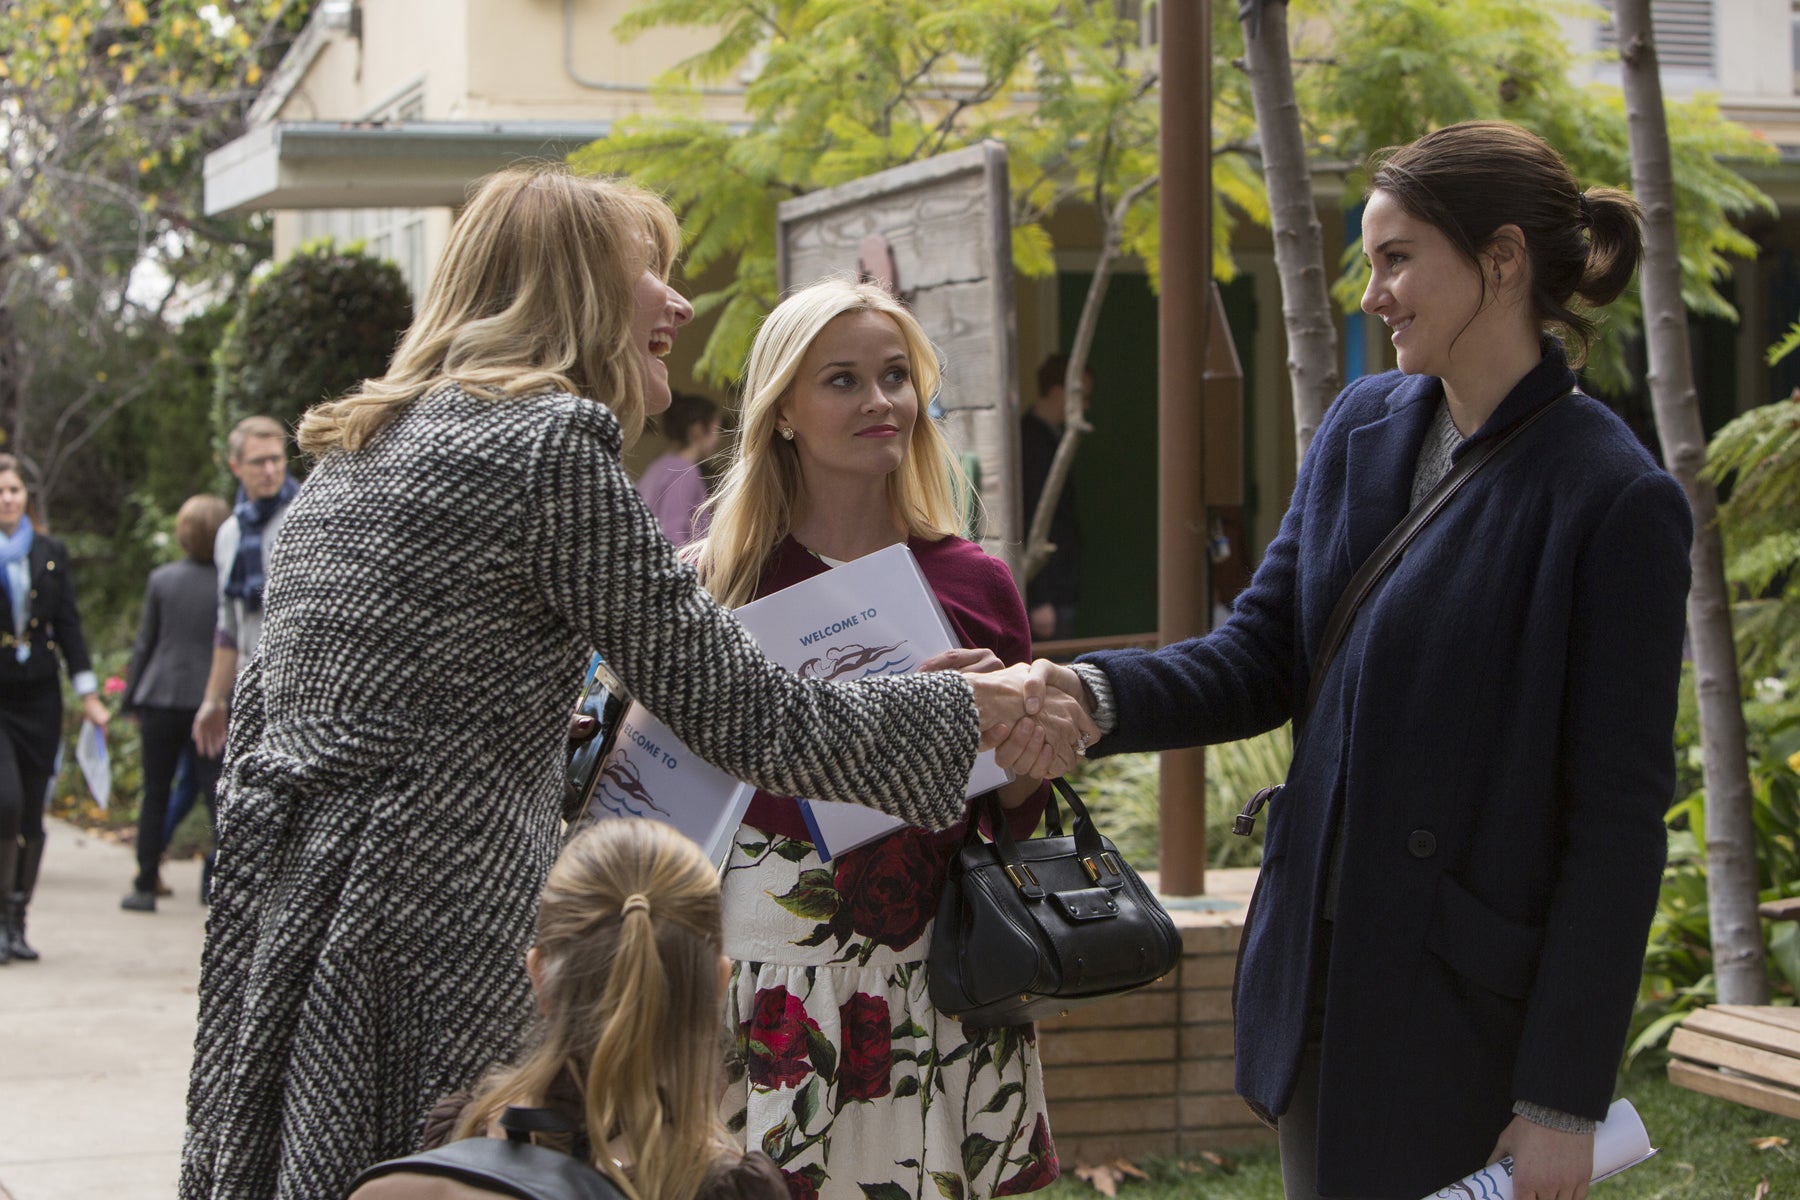 Jane Chapman (Shailene Woodley) shakes hands with Renata Klein (Laura Dern) as Madeline Martha Mackenzie (Reese) looks on.